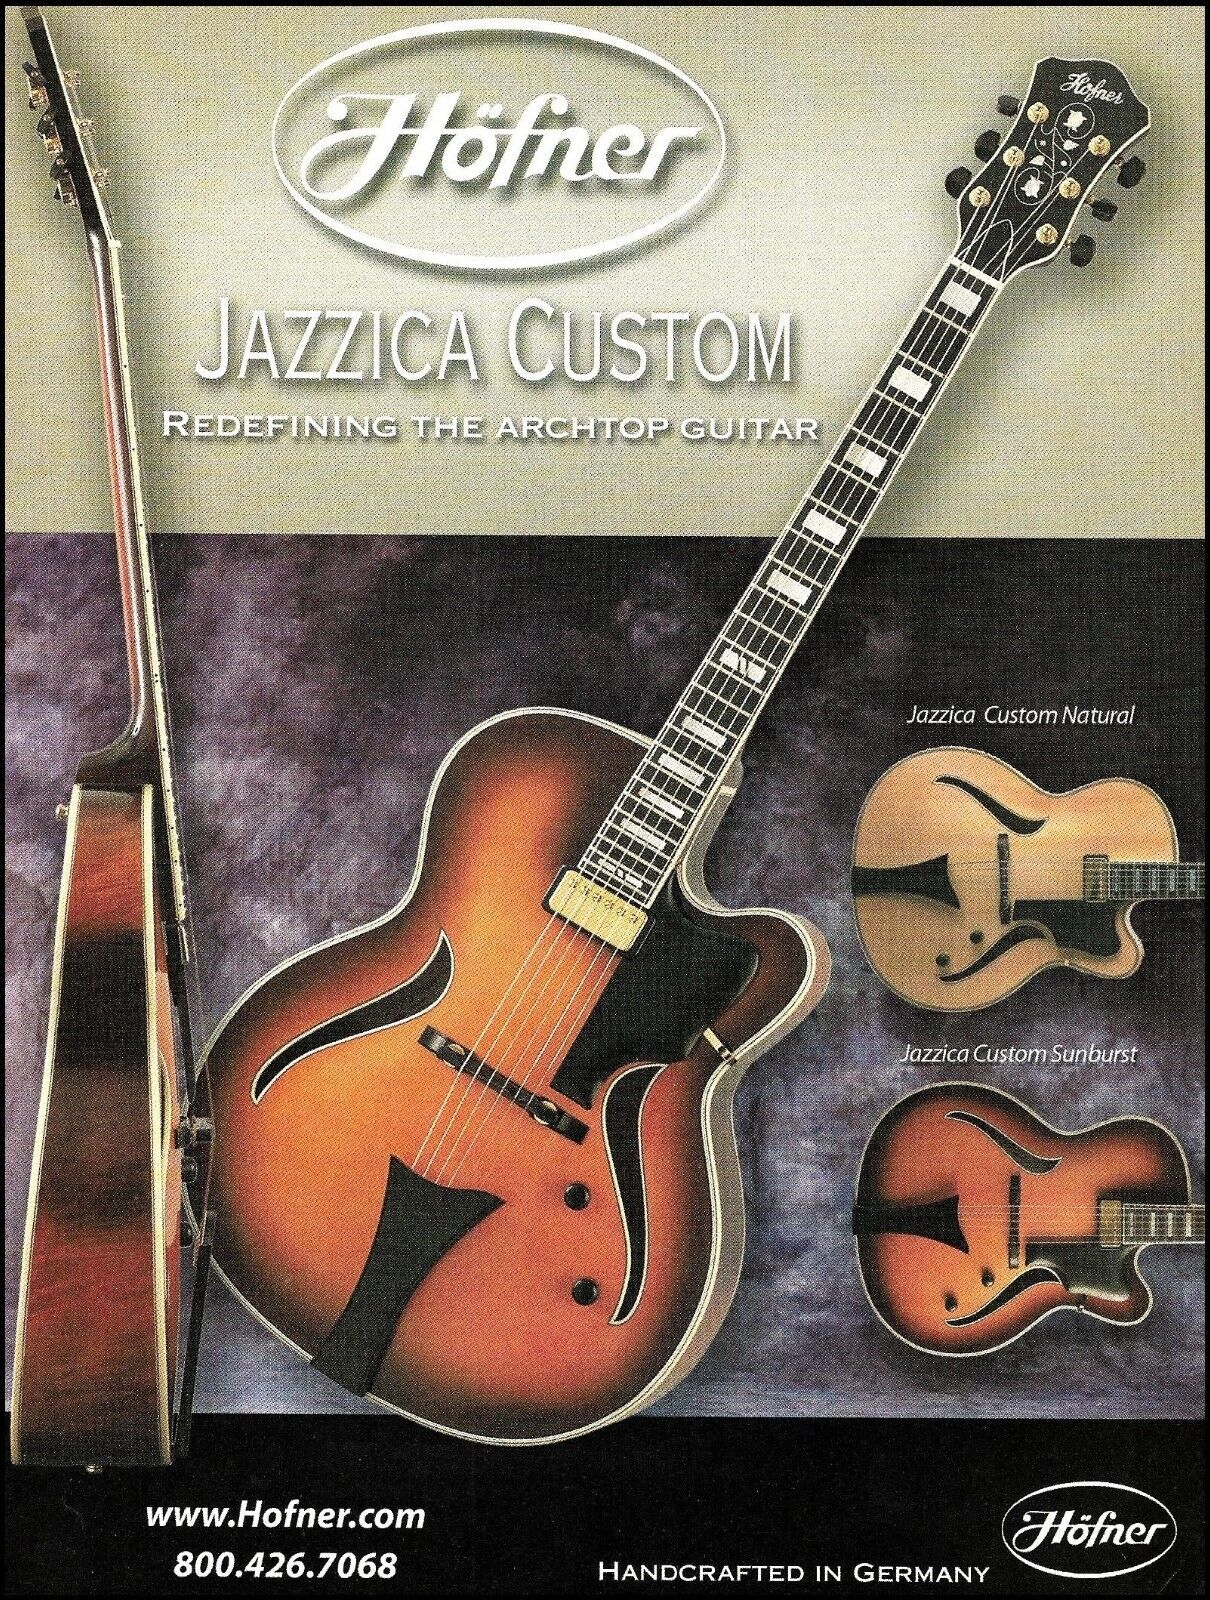 Hofner Jazzica Custom Sunburst guitar 2003 advertisement 8 x 11 ad print